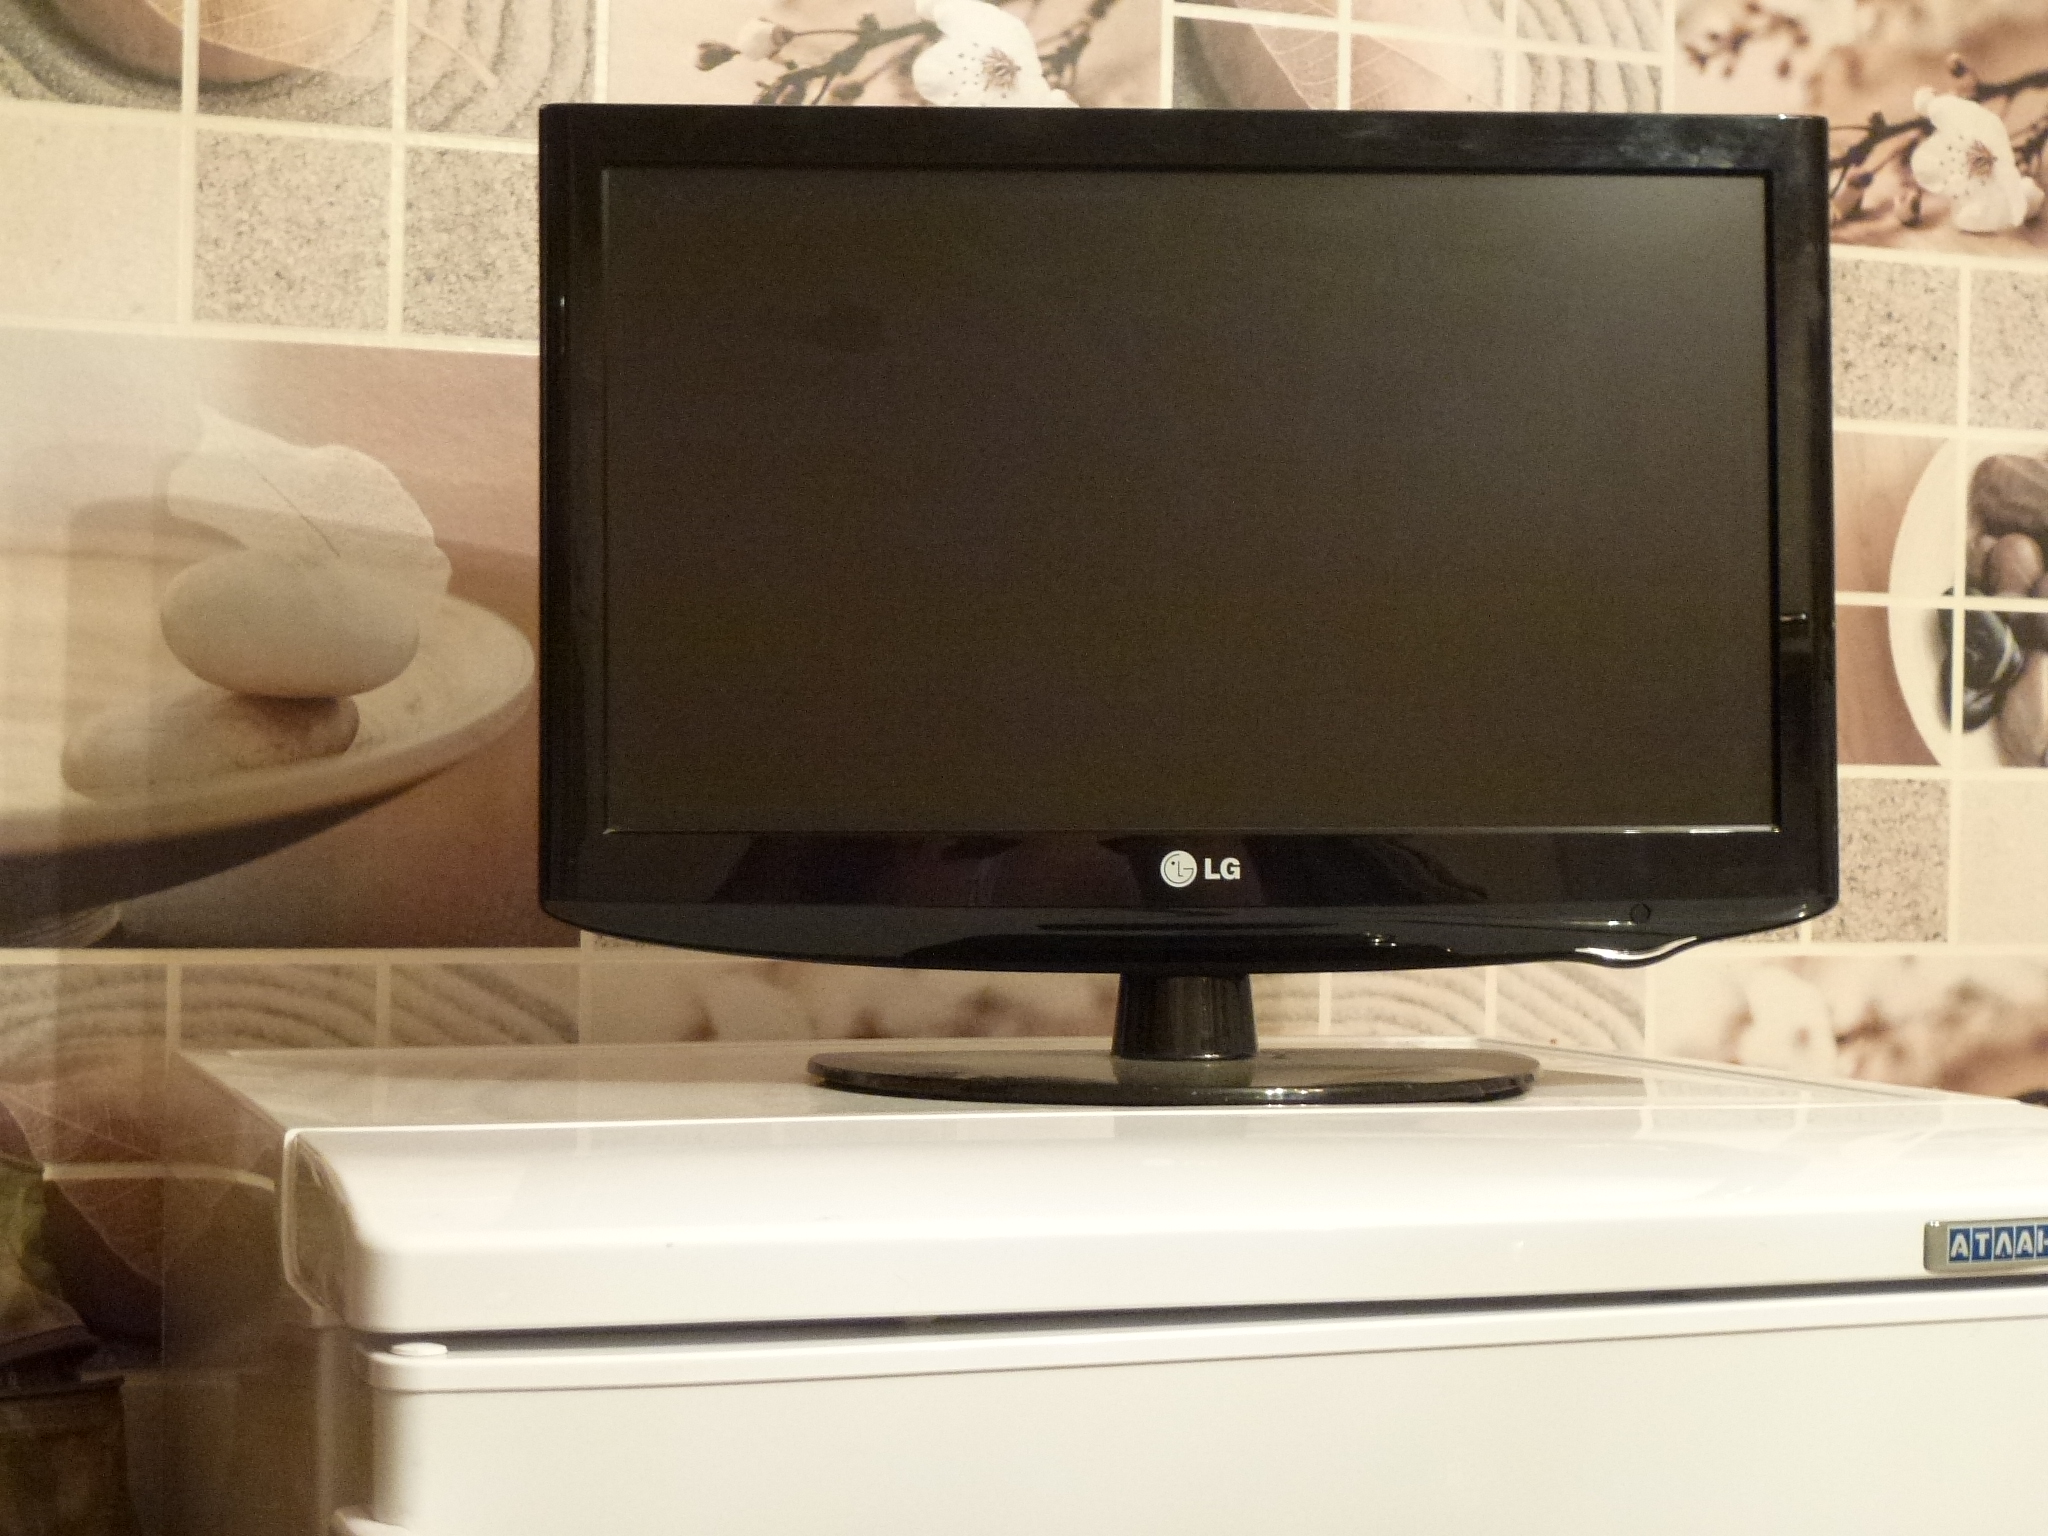 Авито продажа бу телевизоров. Маленький телевизор. Маленький плазменный телевизор. Телевизор LG маленький. Телевизор маленький плоский.